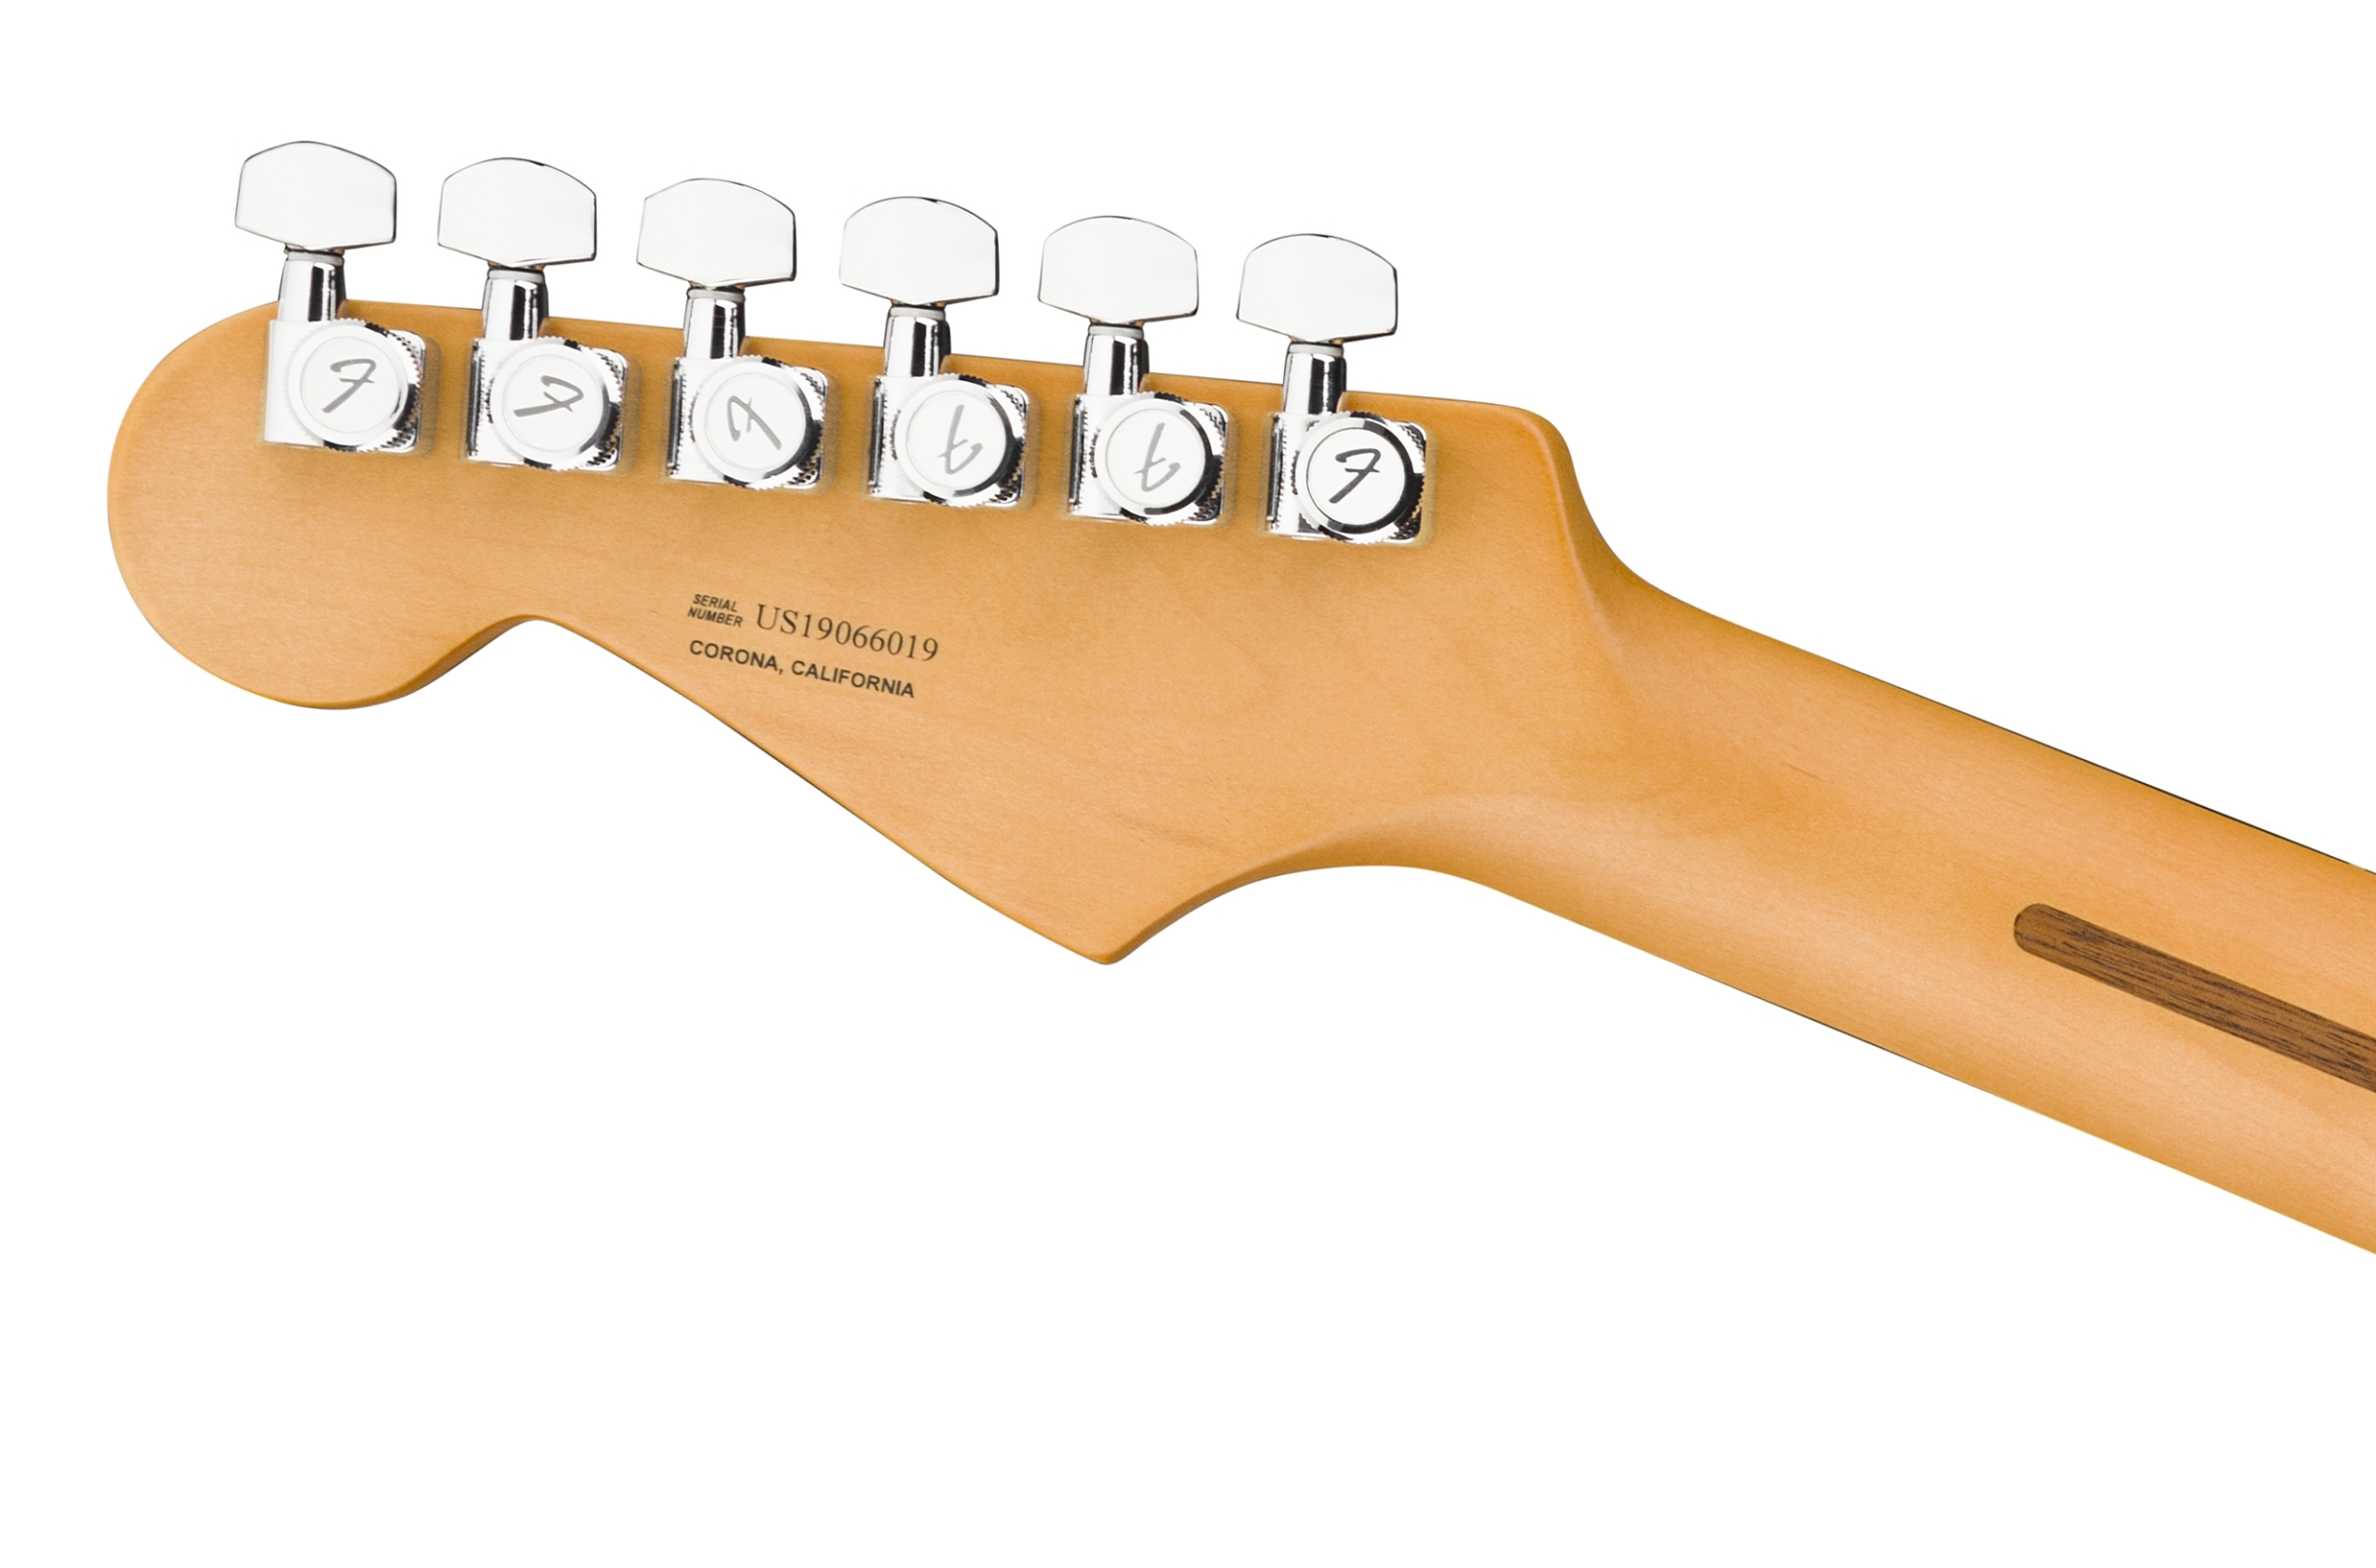 Fender  American Ultra Stratocaster® HSS, Rosewood Fingerboard, Cobra Blue